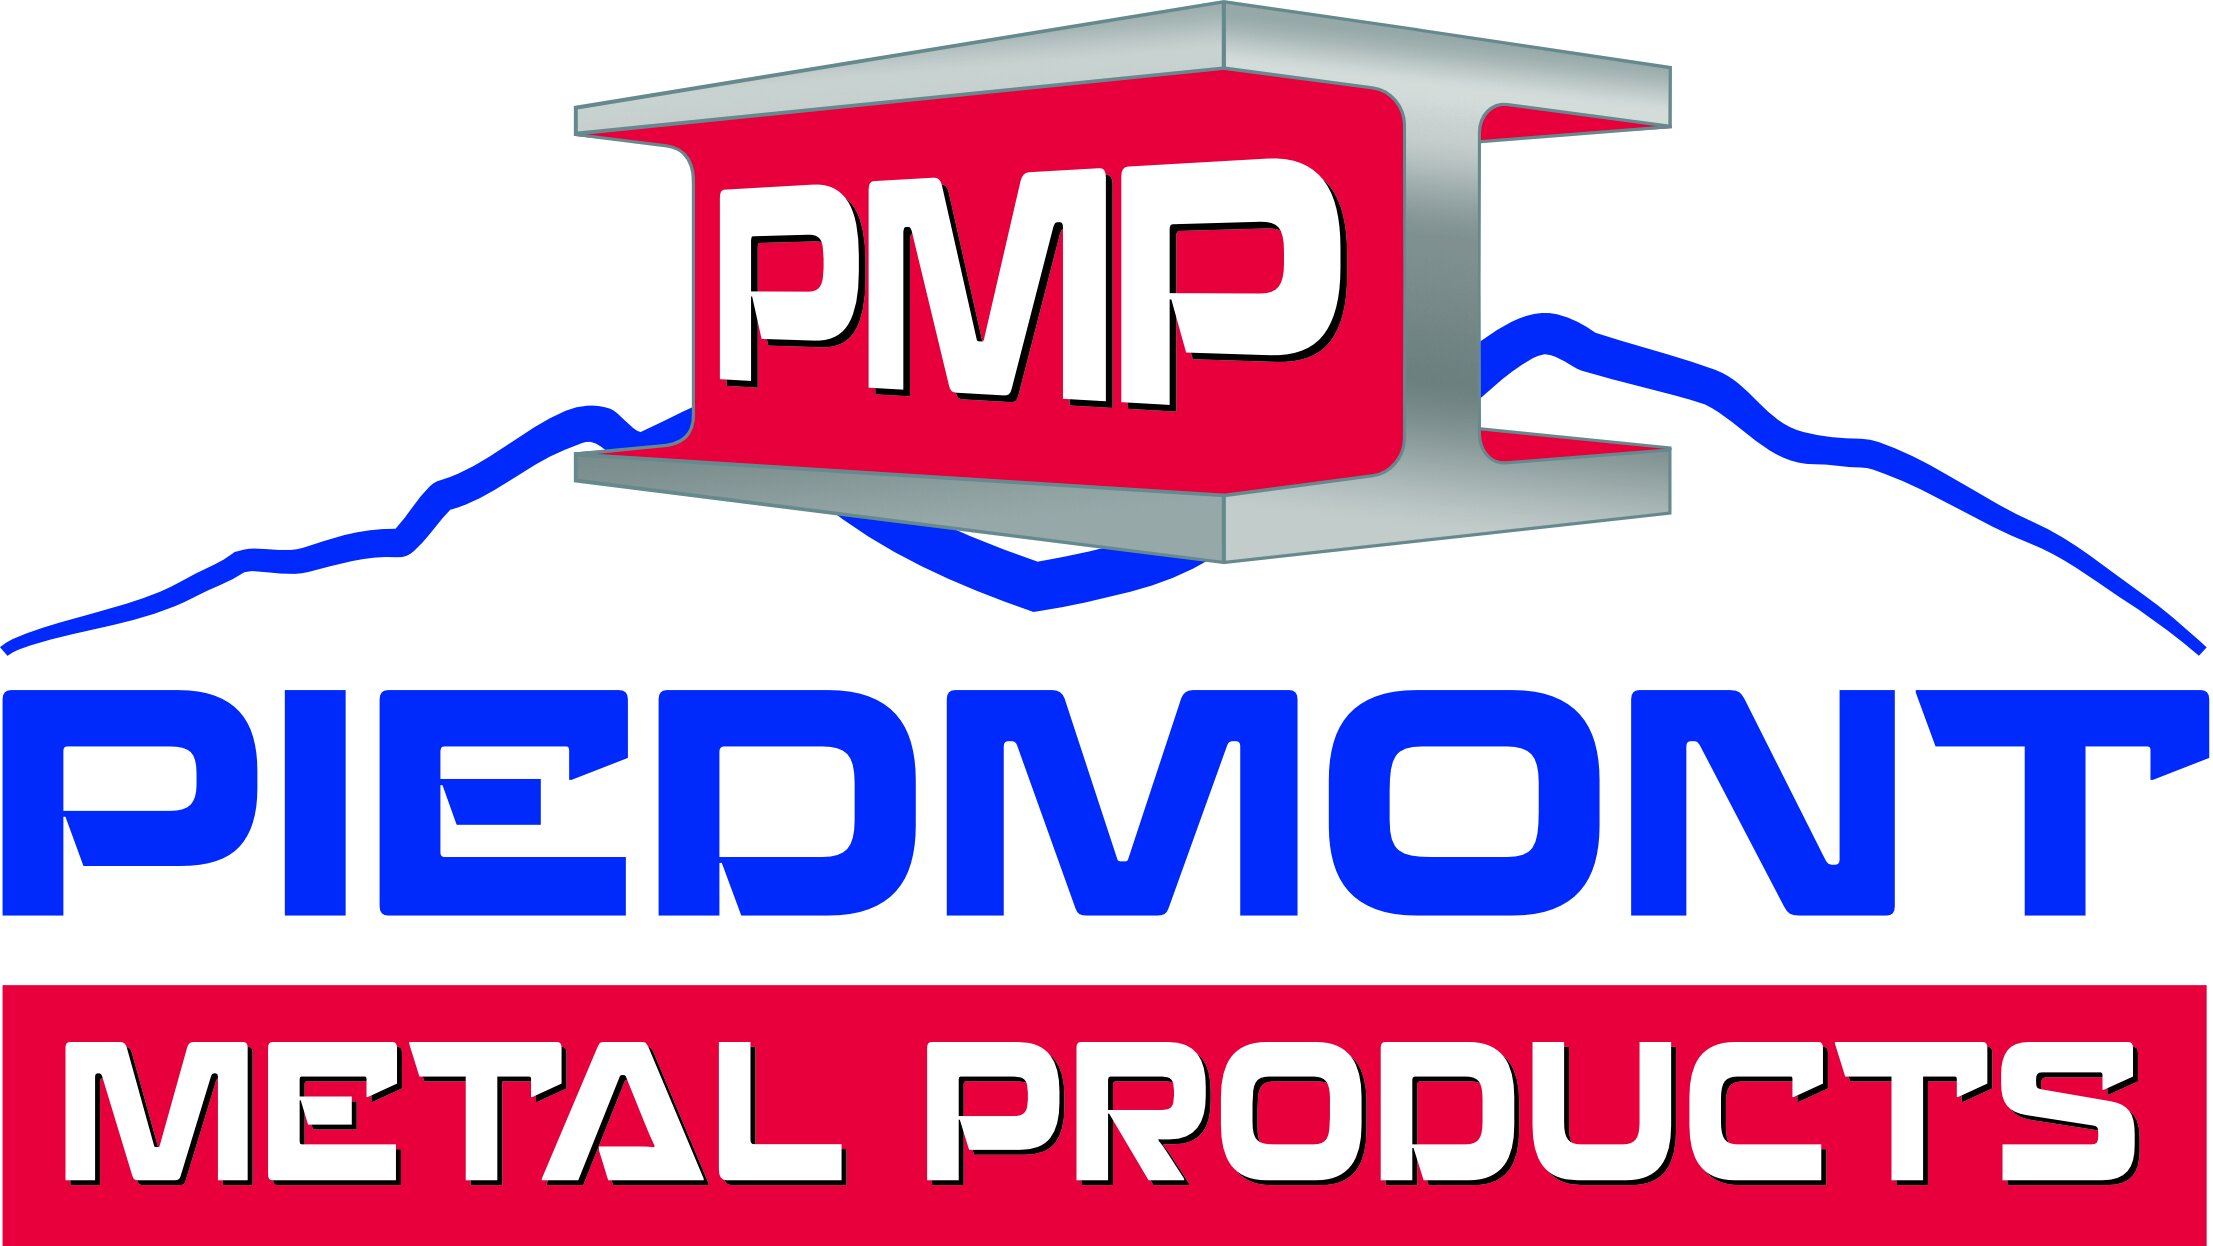 Piedmont Metal Products